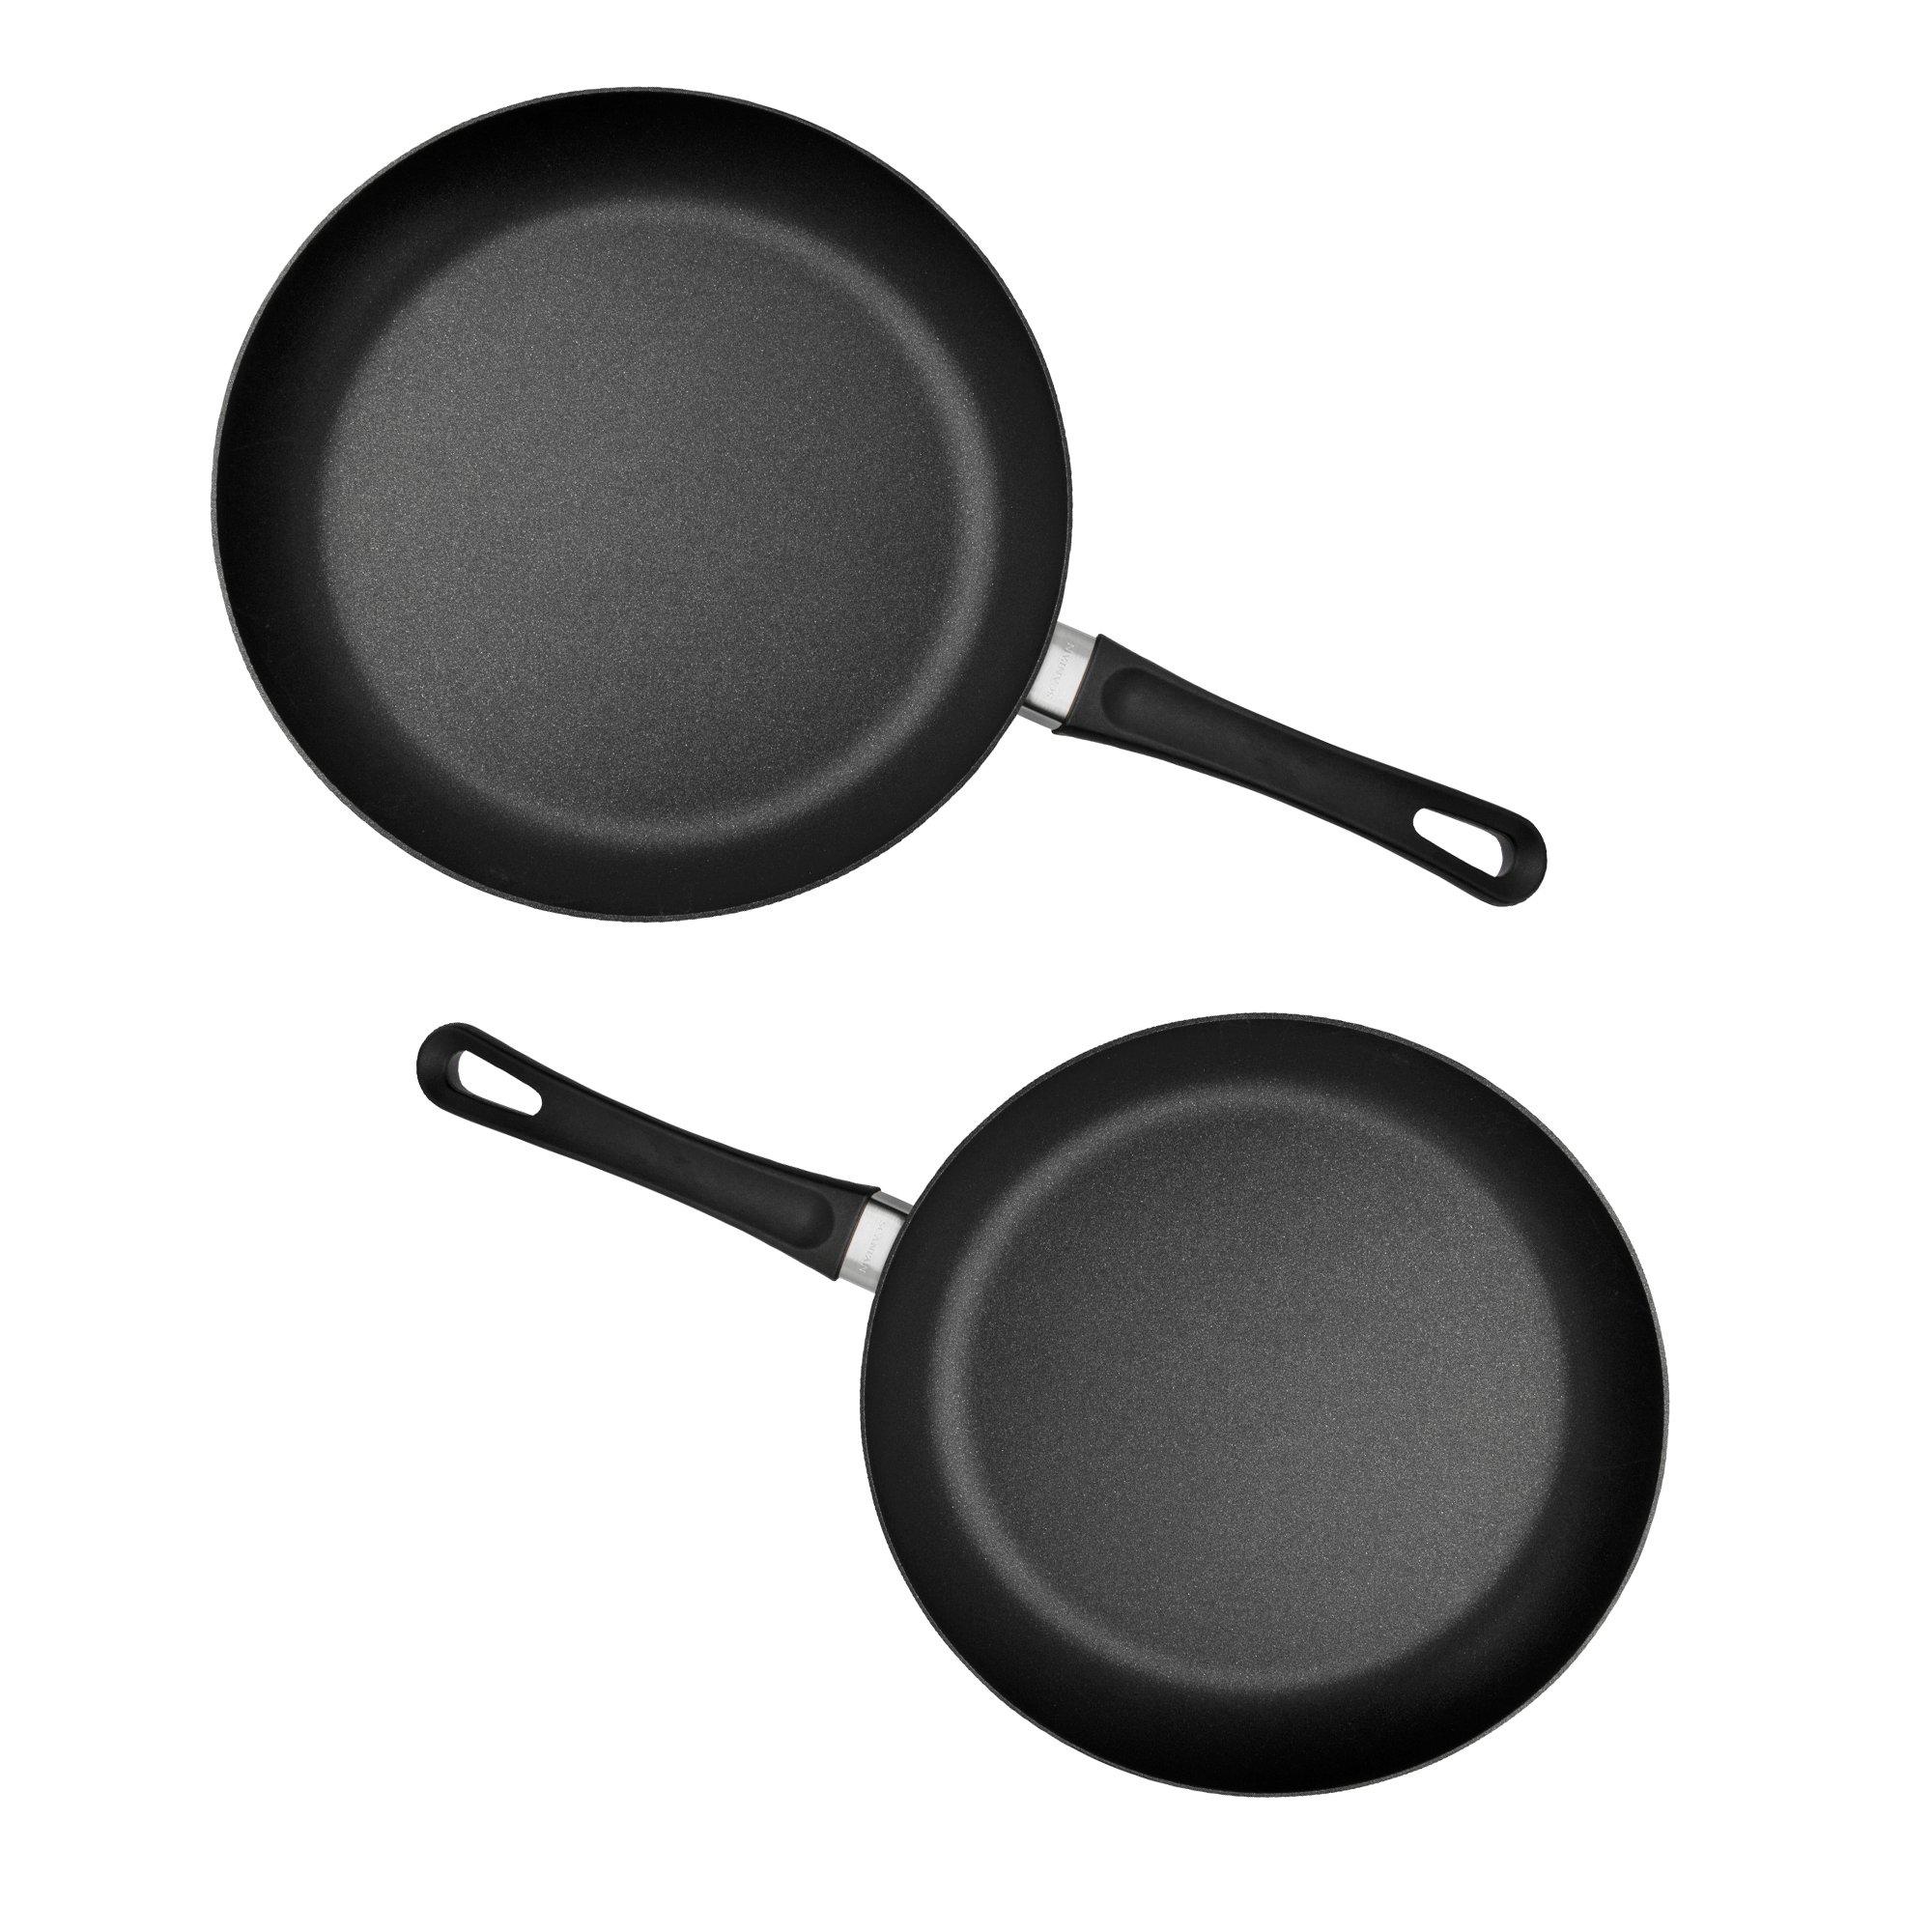 SCANPAN Classic 10202800, two-piece frying pan set, 20 and 28 cm